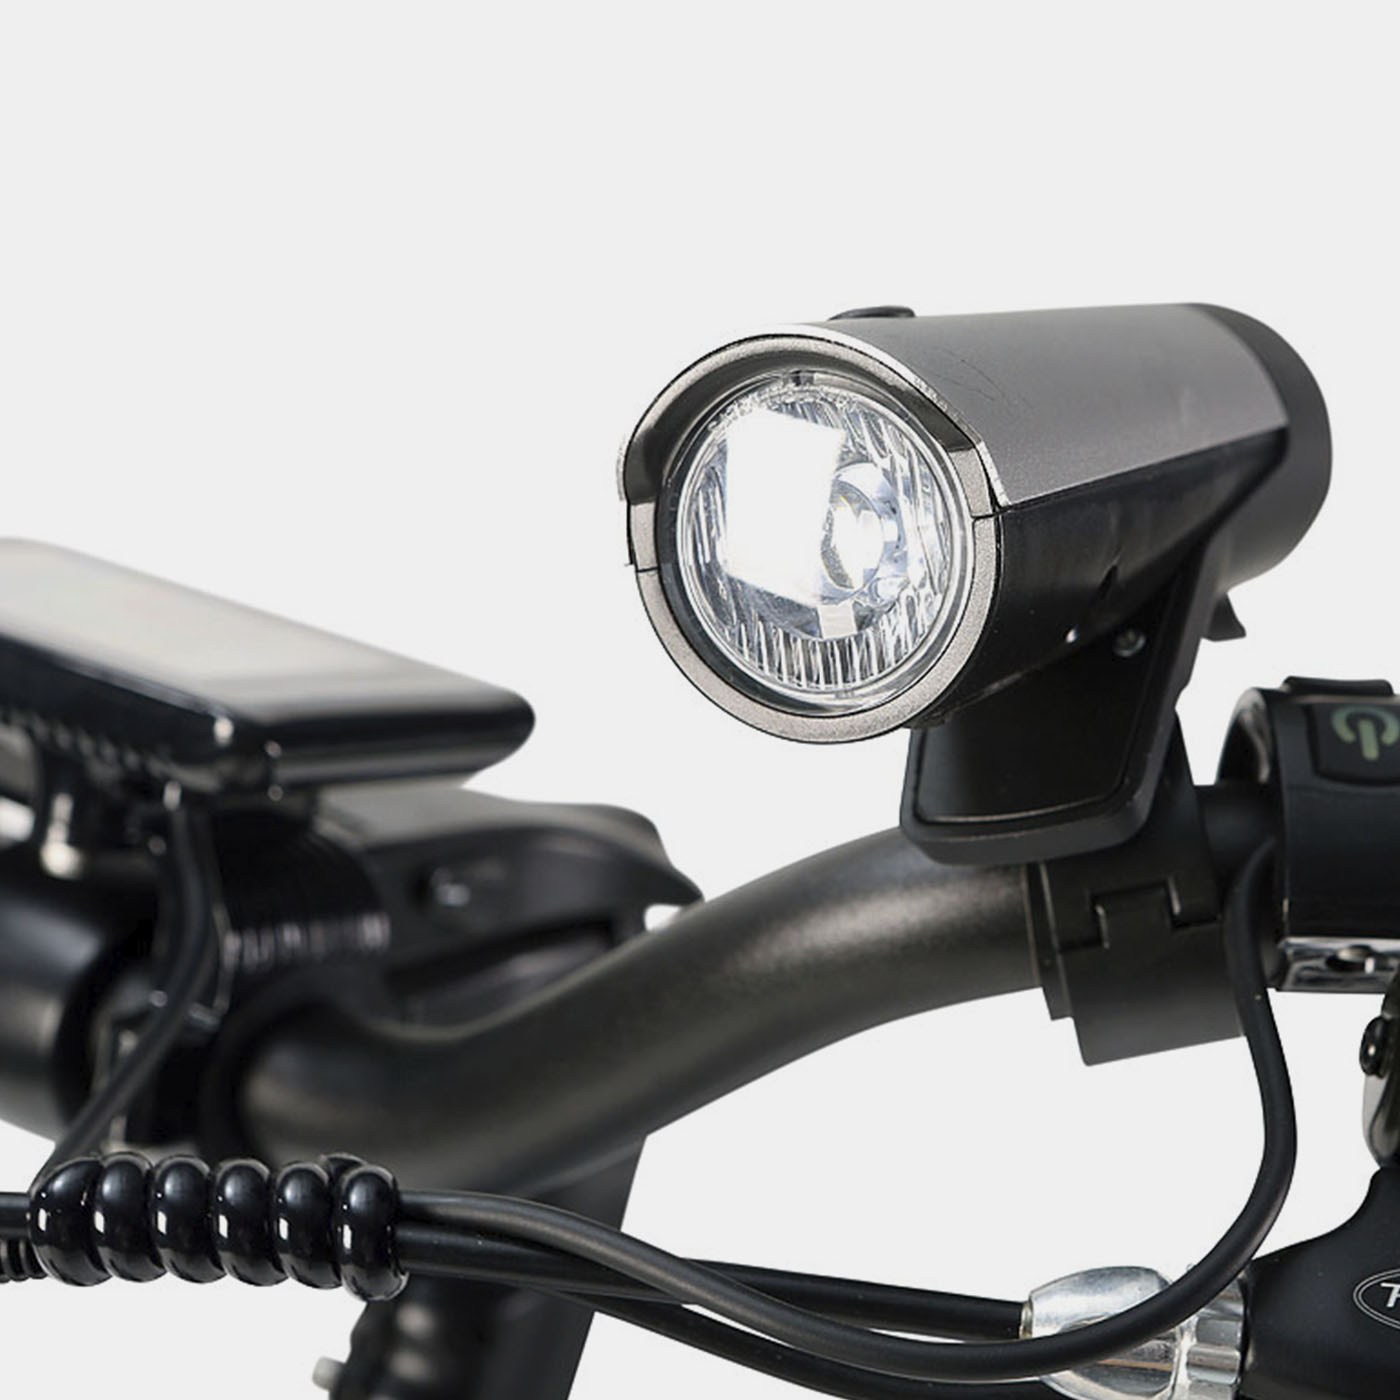 Bintelli Trend Electric Commuter Bike Headlight